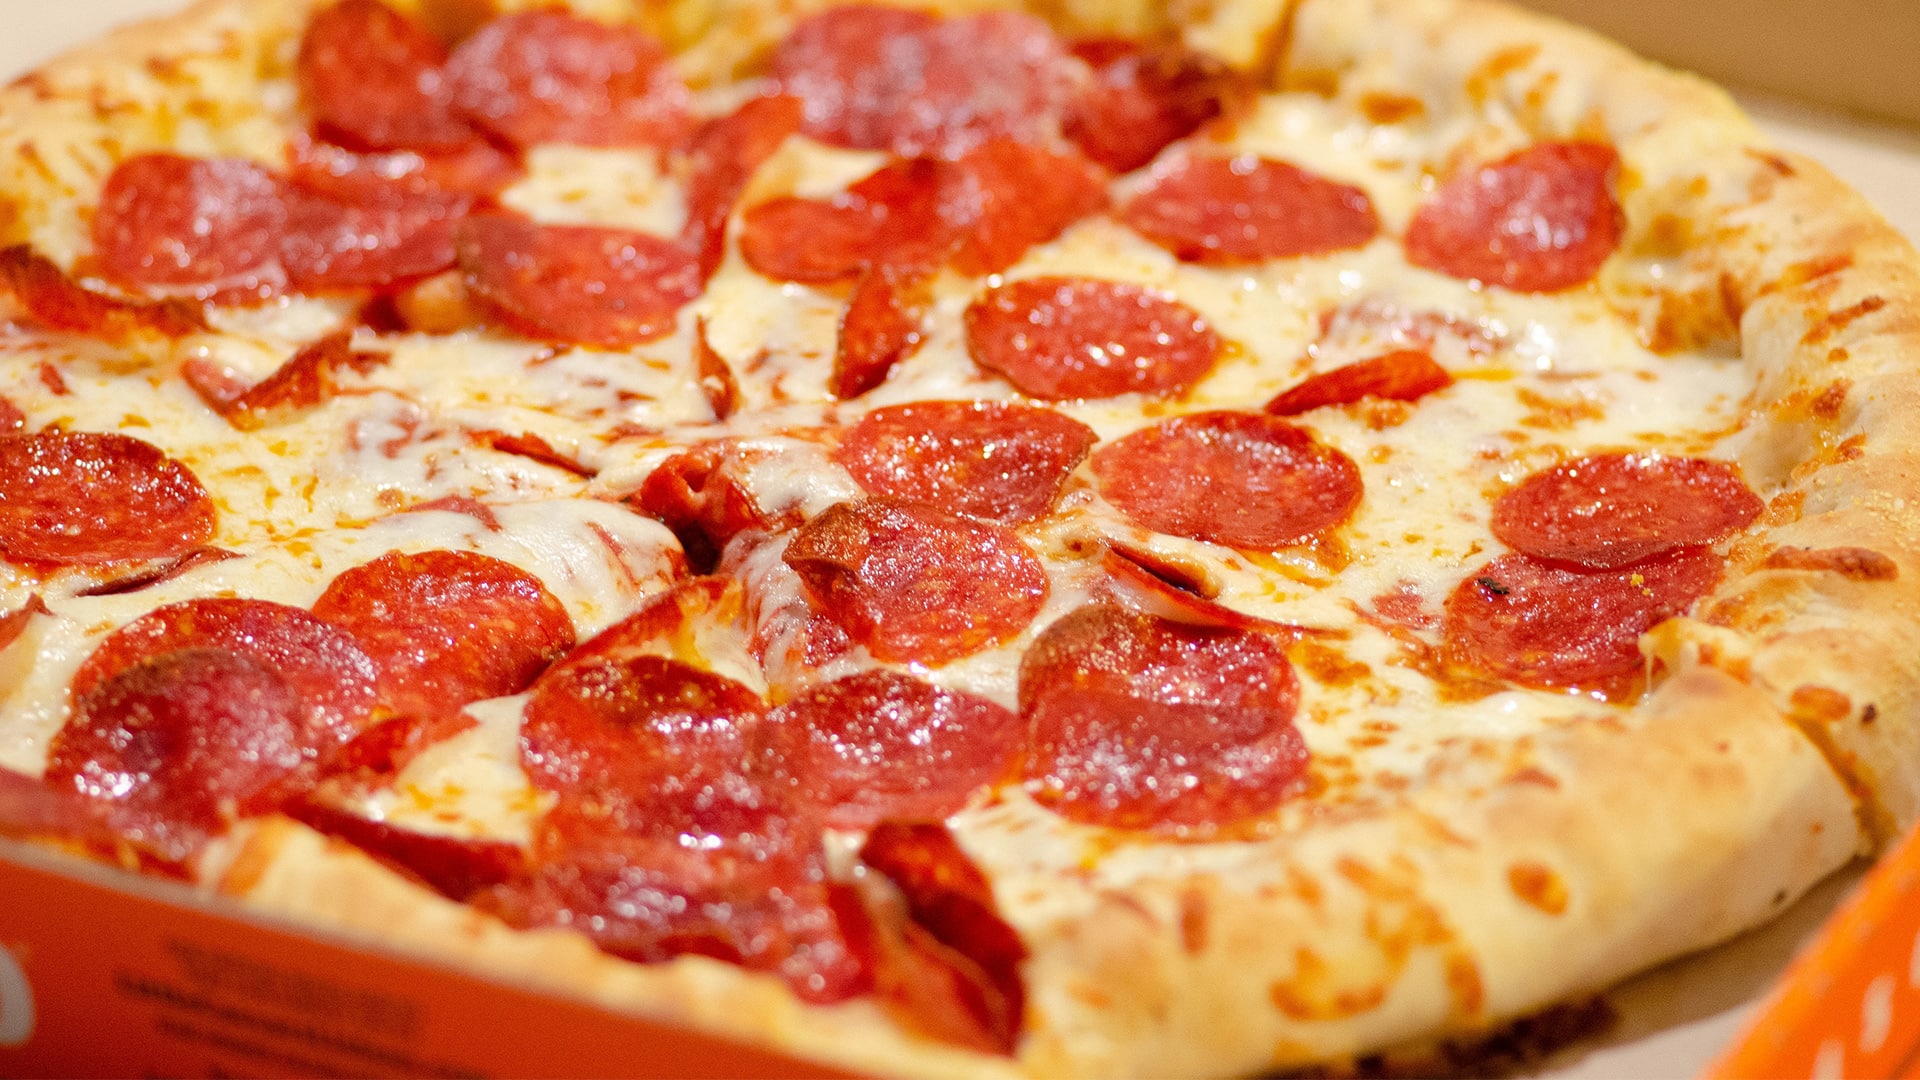 Download an app: Enjoy a free pizza!